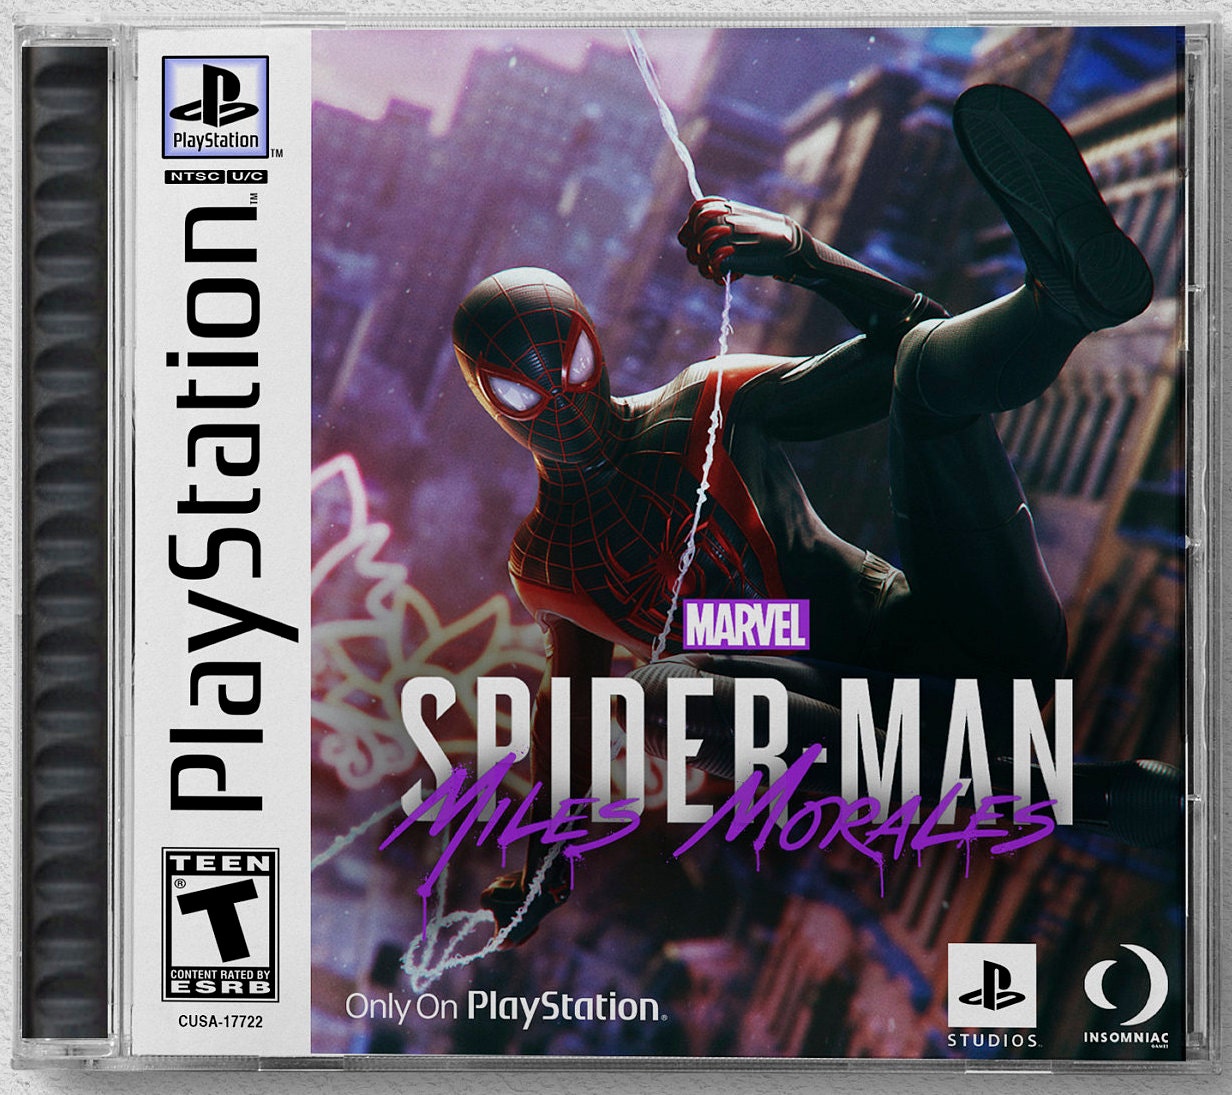 Spider-man [REPLICA] - PS1 ONE - Sebo dos Games - 10 anos!